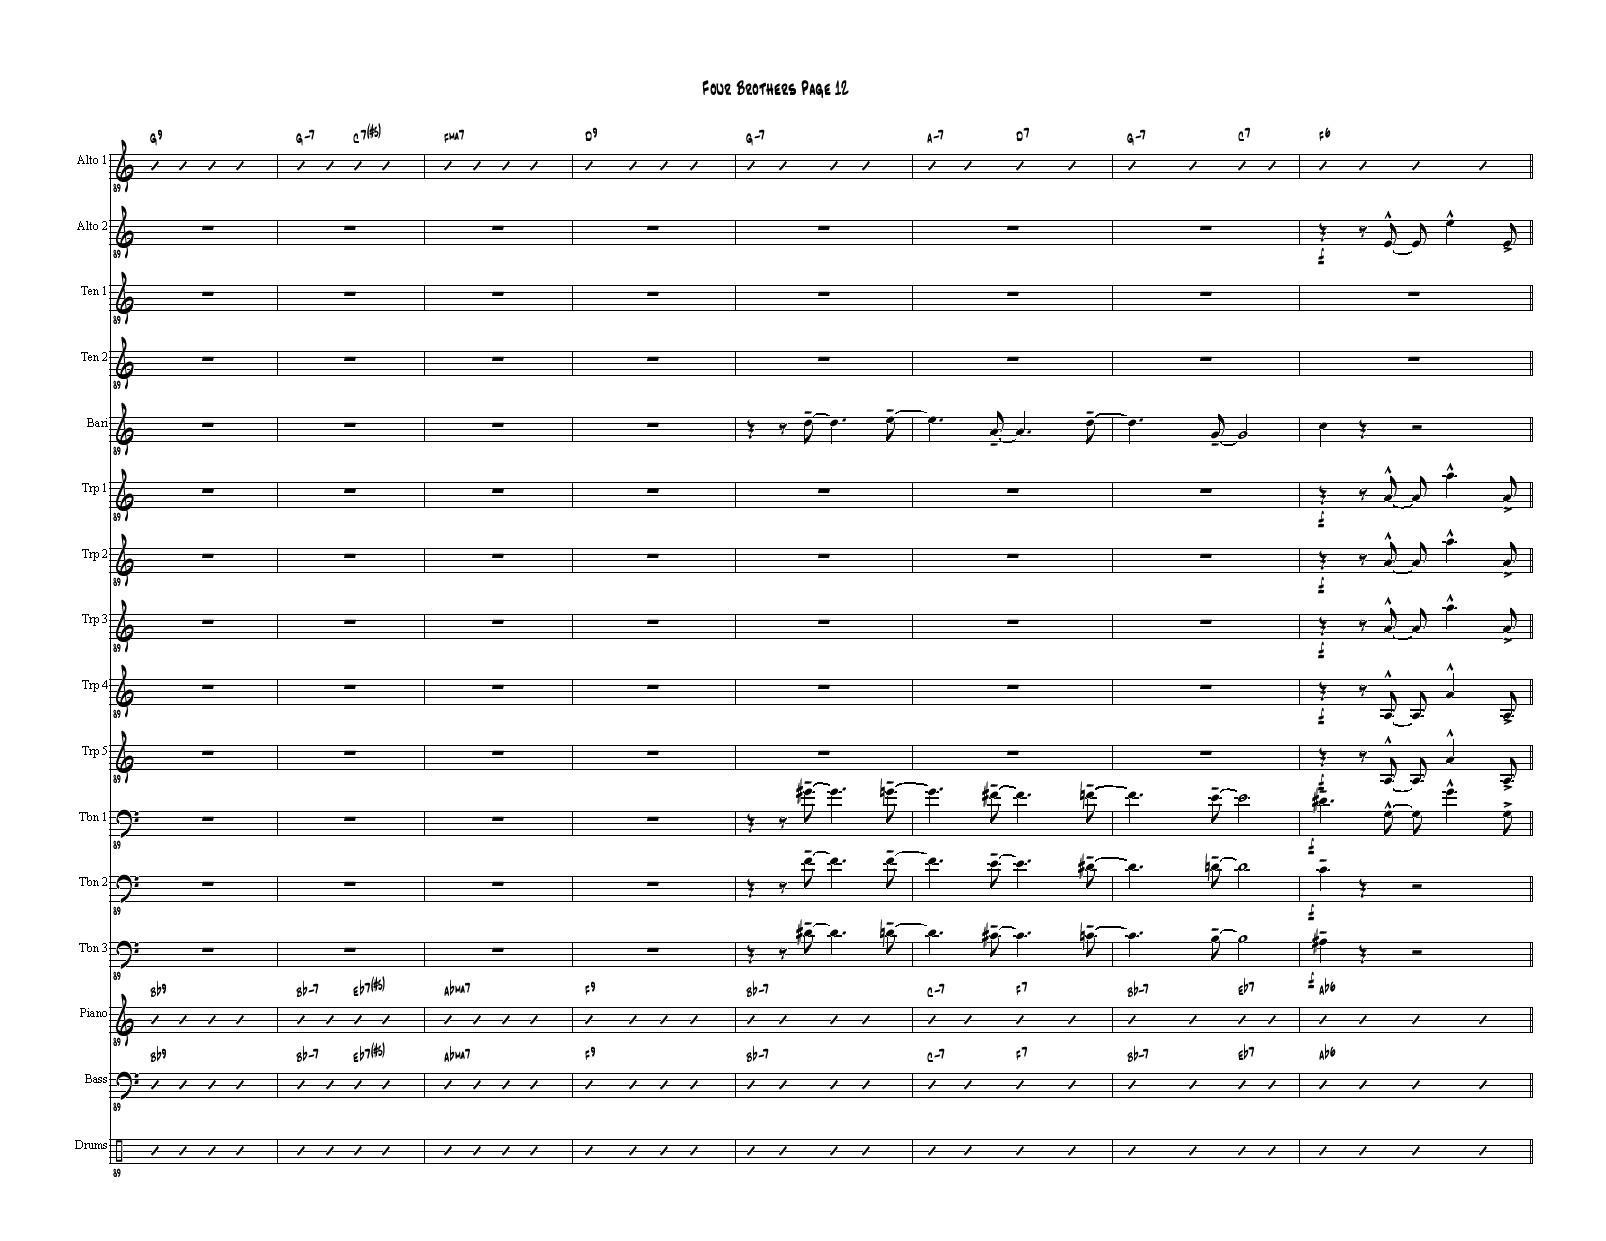 Four Brothers Big Band score（大爵士乐队总谱）其它曲谱（图12）